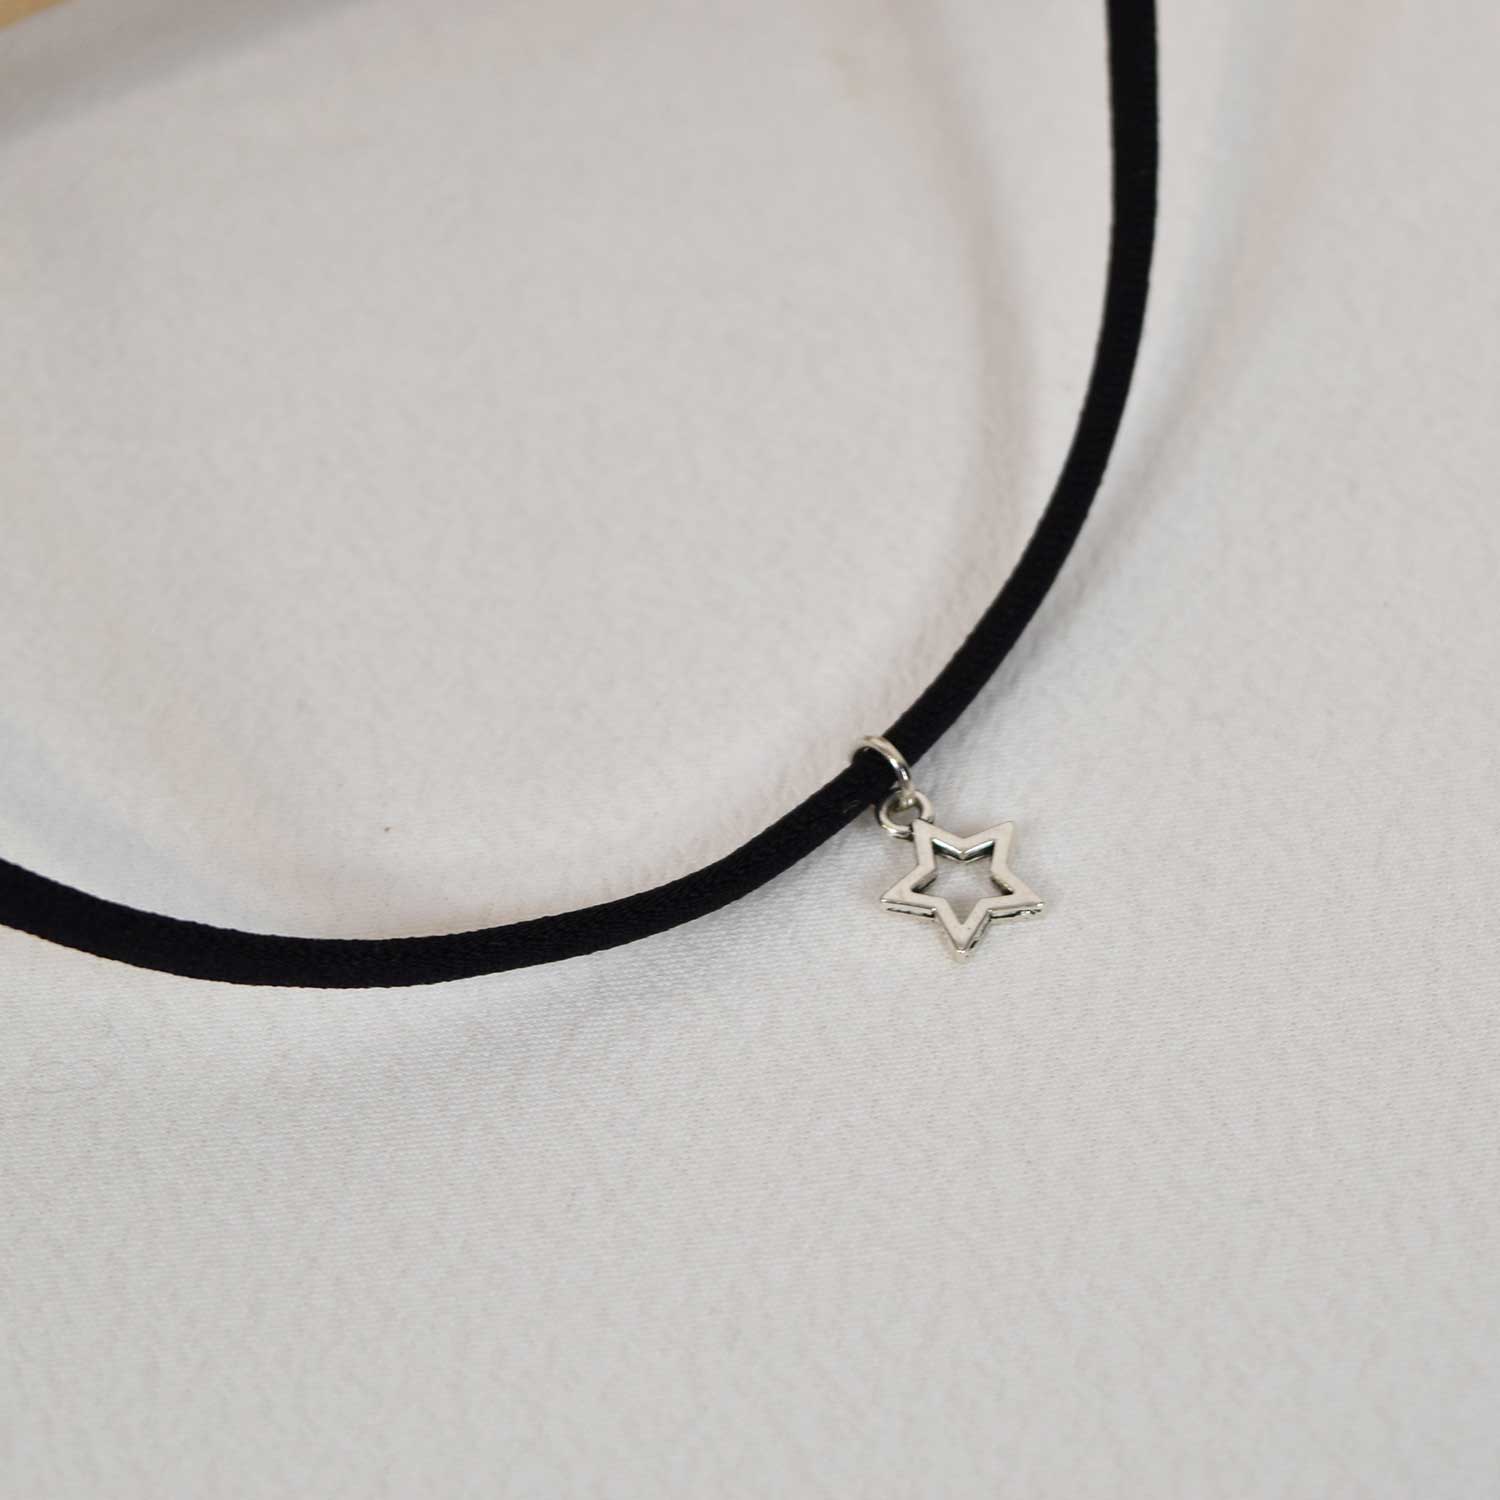 Black star elastic necklace